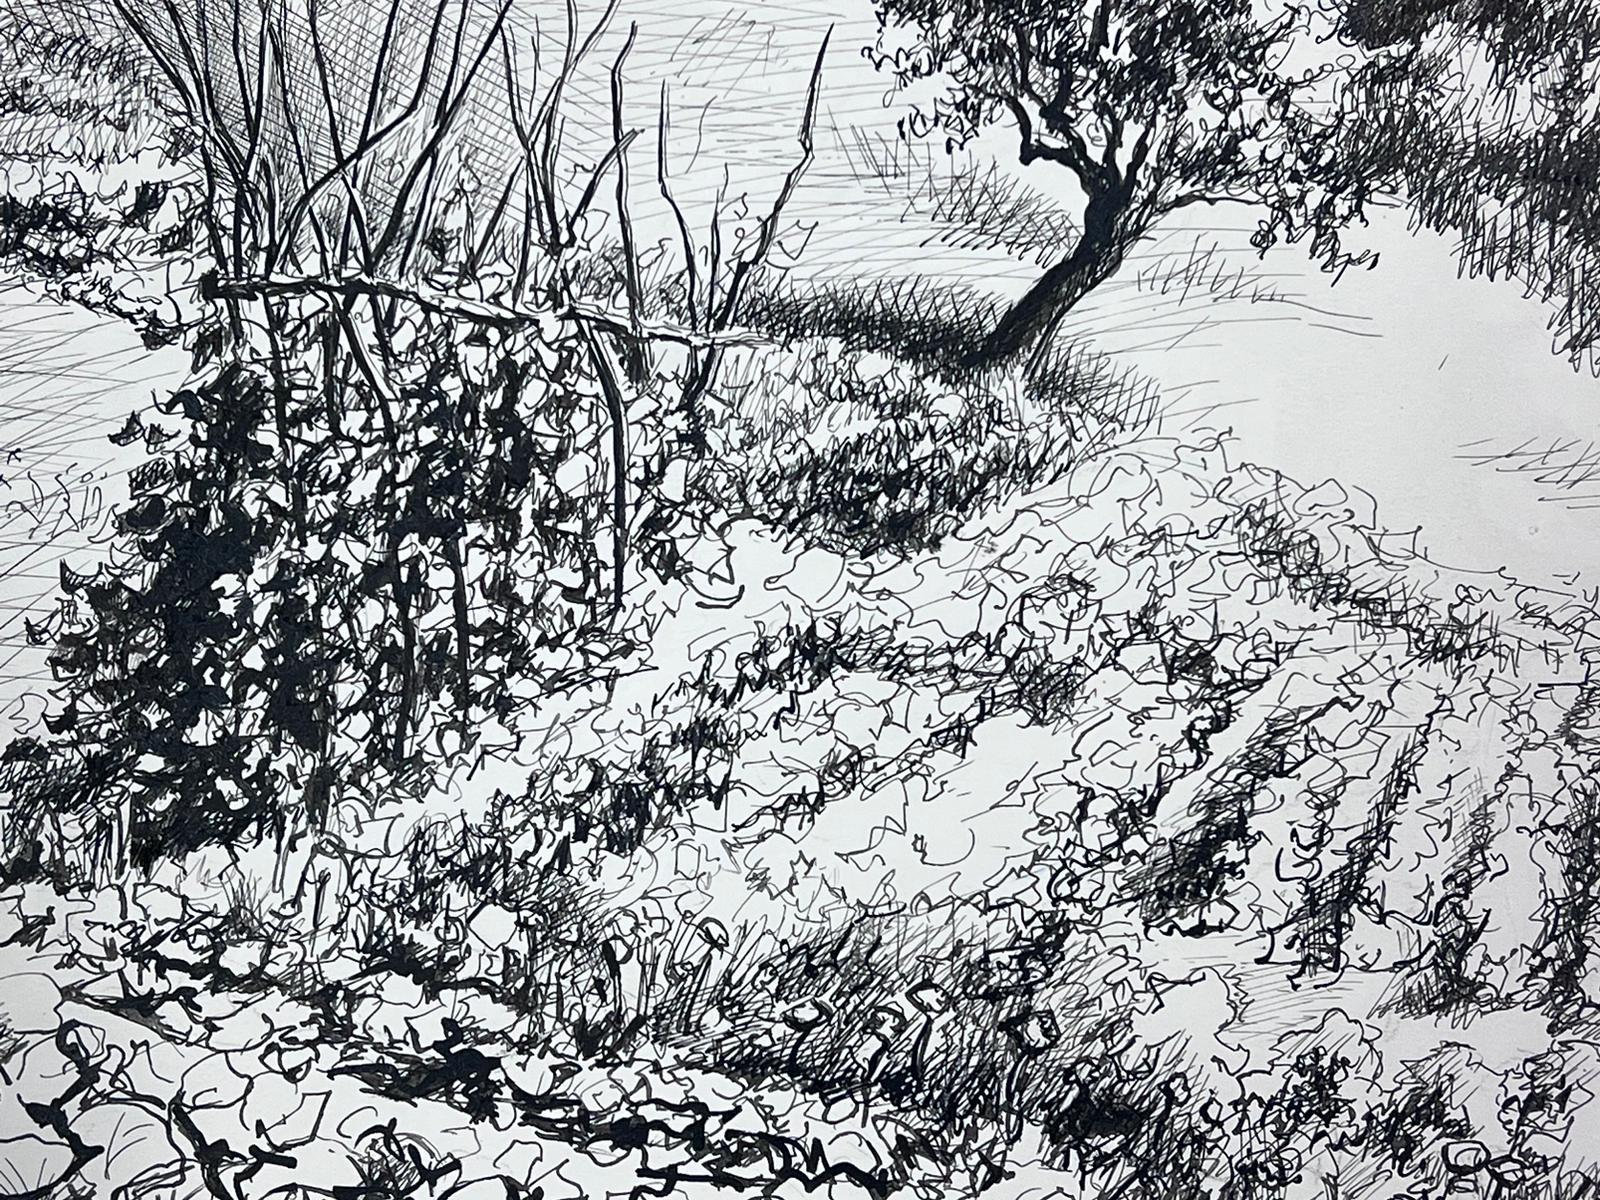 1950s Post Impressionist Landscape Ink Drawing Provence Village Garden Grove For Sale 2